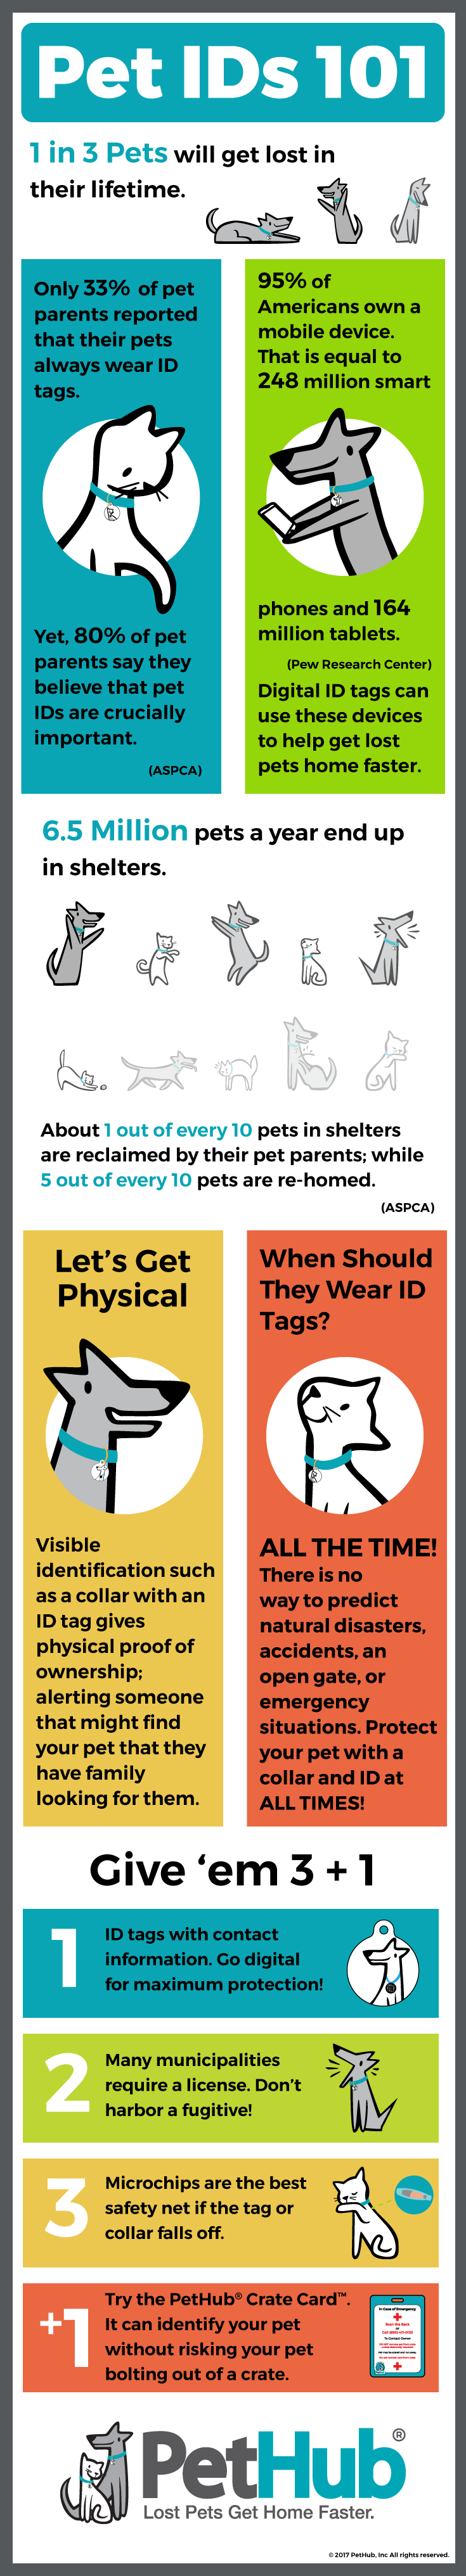 pet IDs 101 infographic